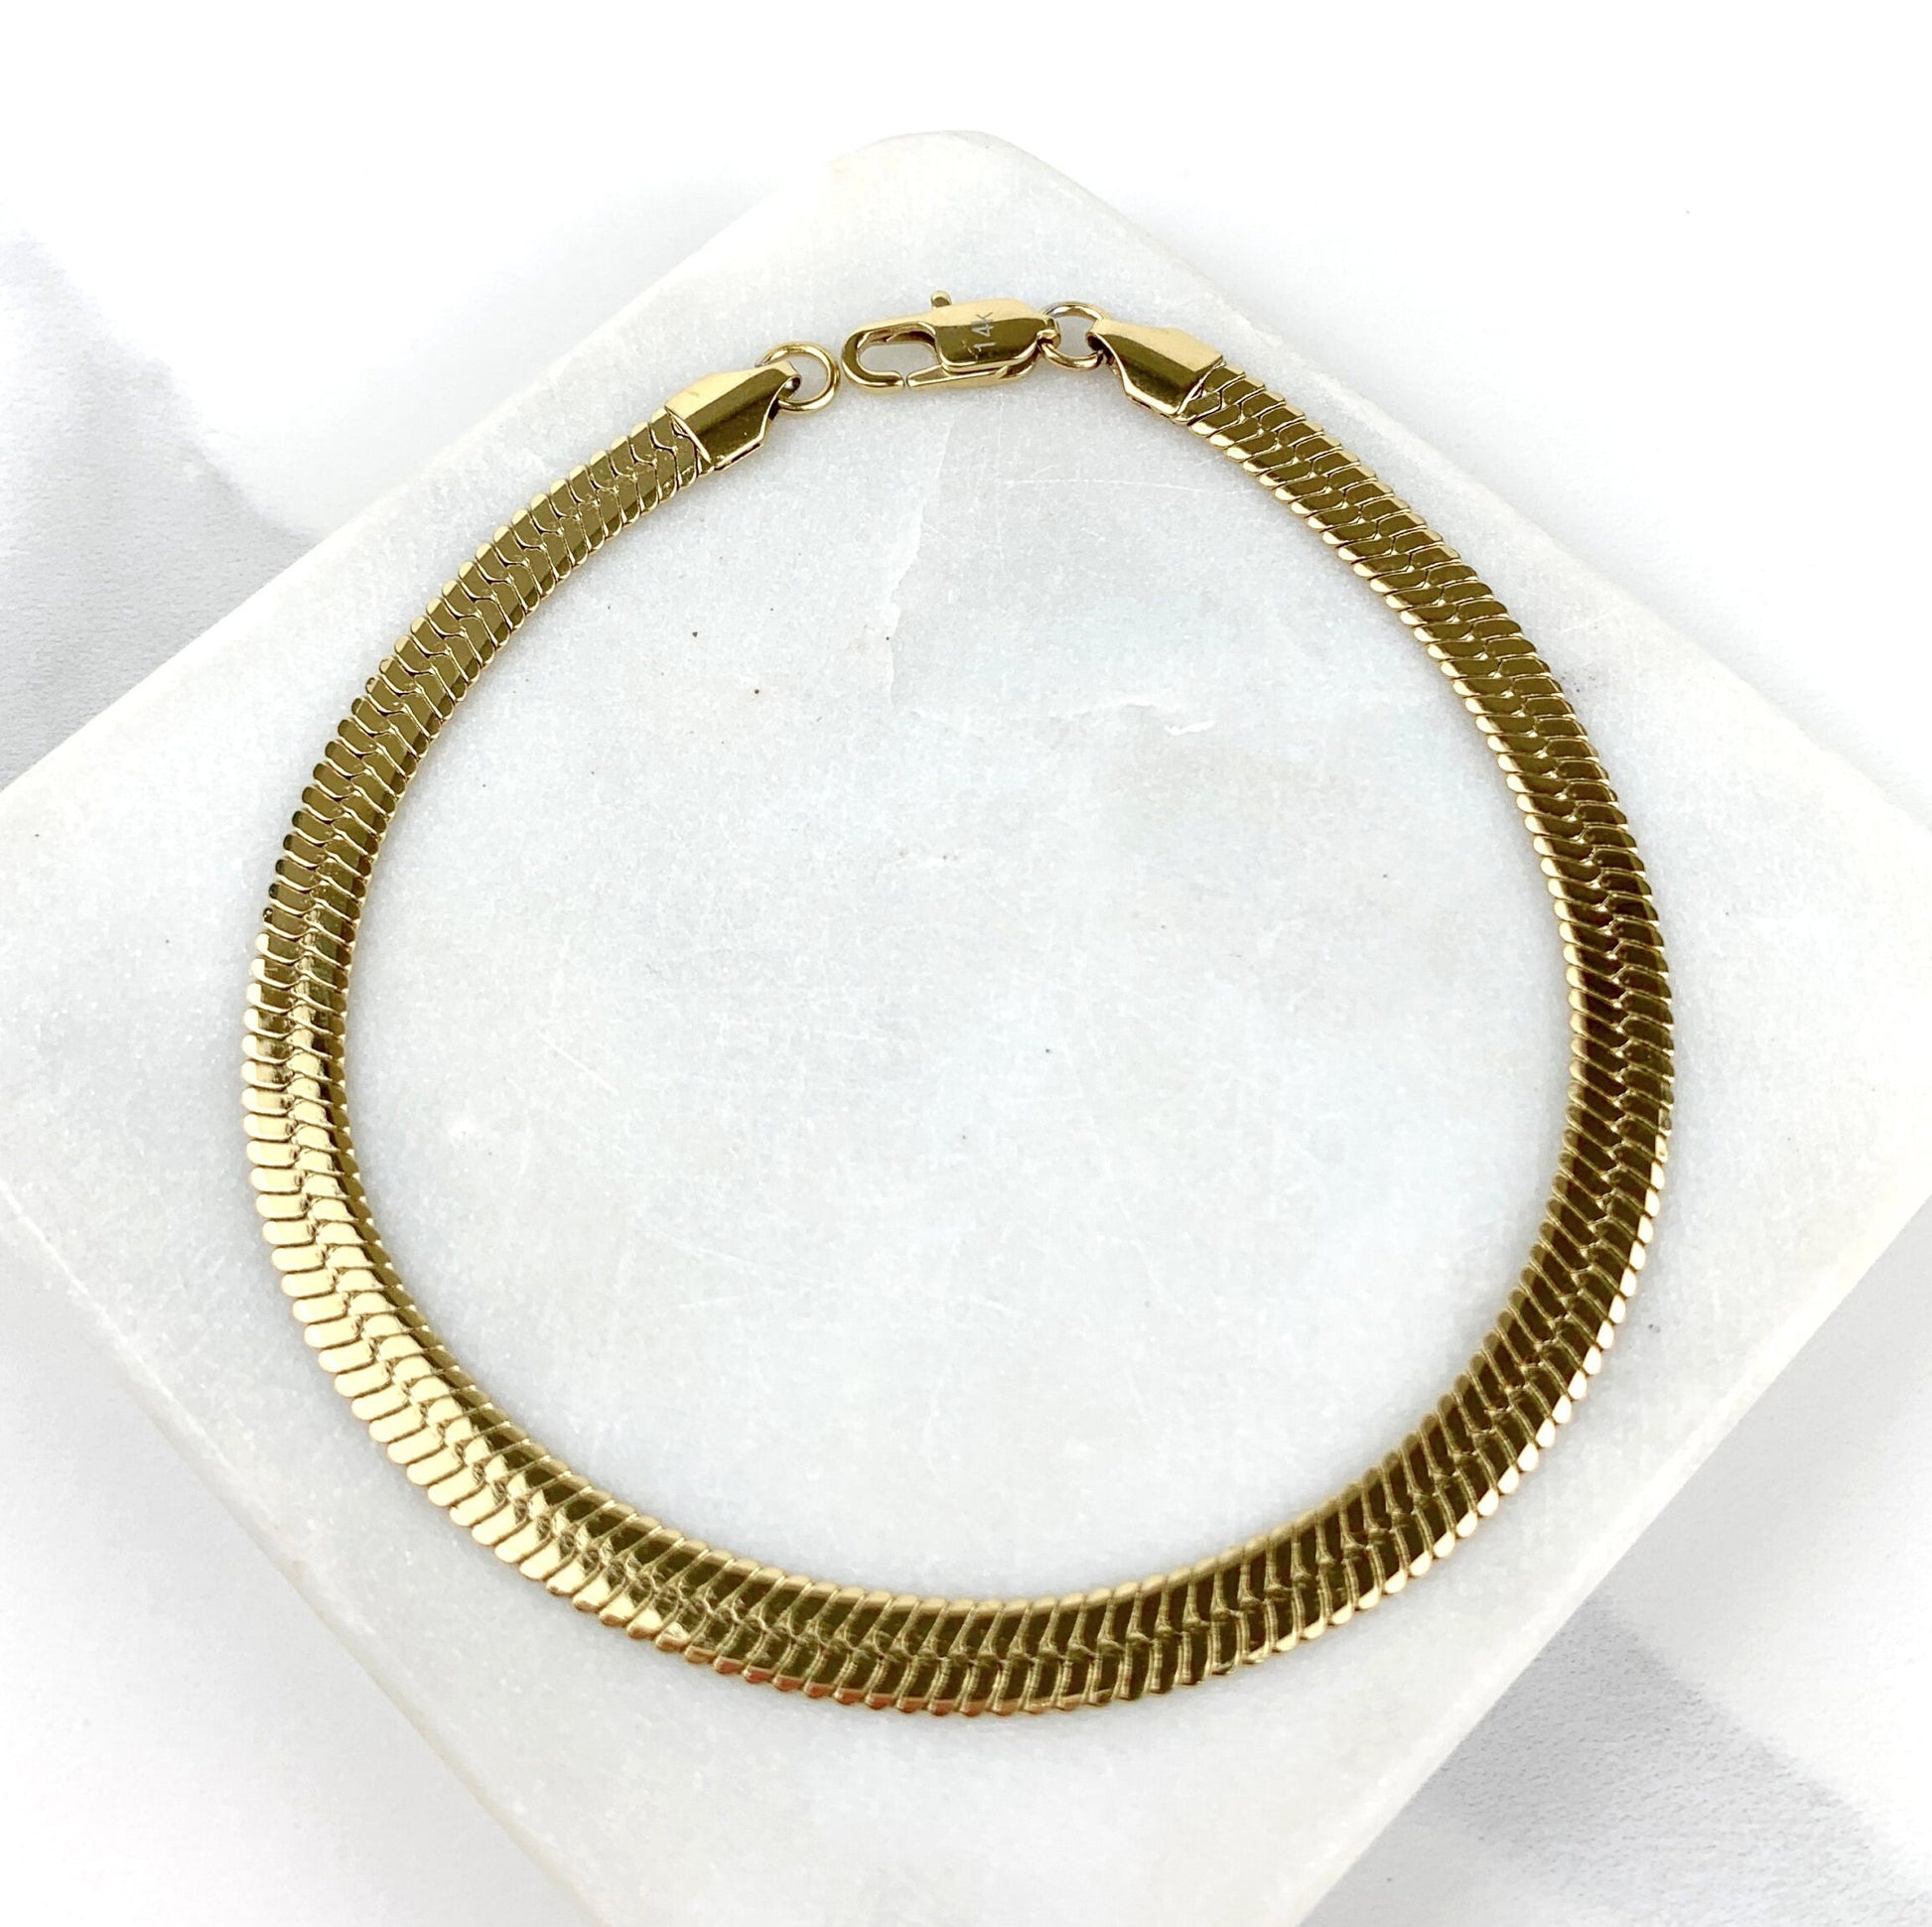 14k Gold Filled Herringbone Chain 4mm, 6mm or 8mm Bracelet Wholesale Jewelry Making Supplies